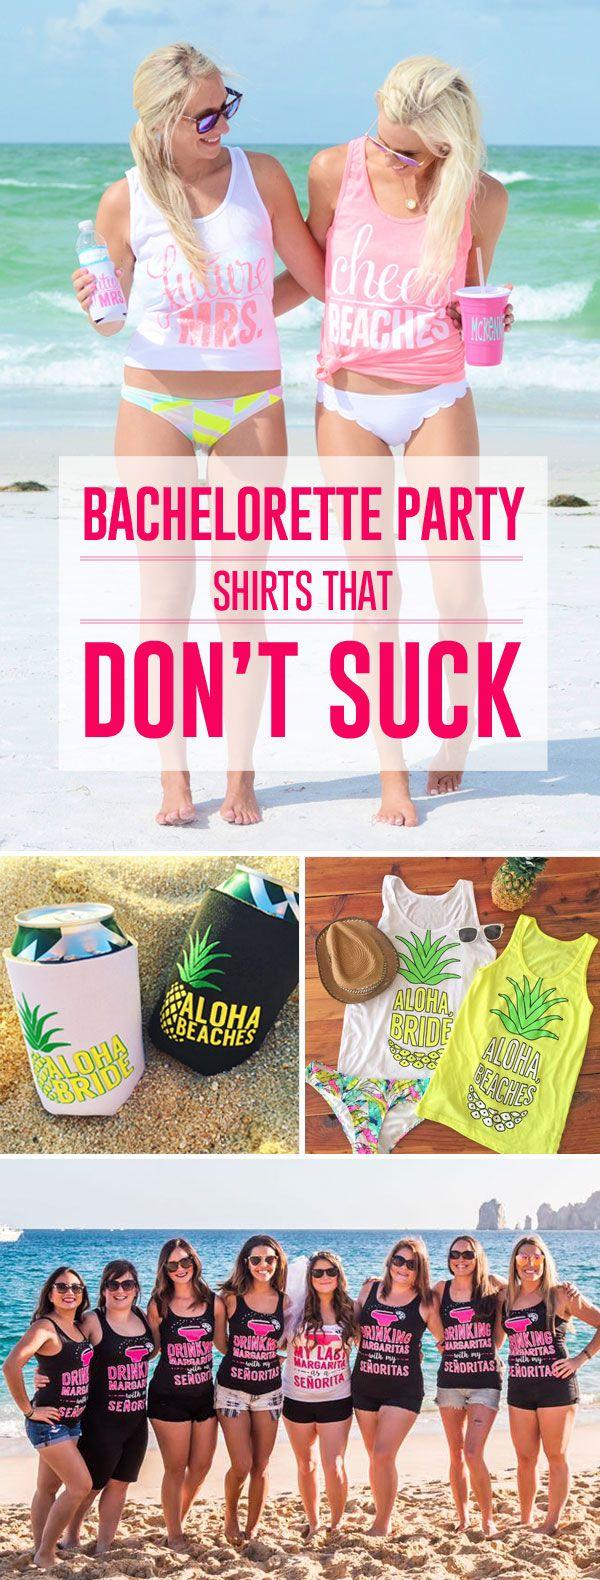 Wedding - Bachelorette Party Shirts (That Don't Suck!)